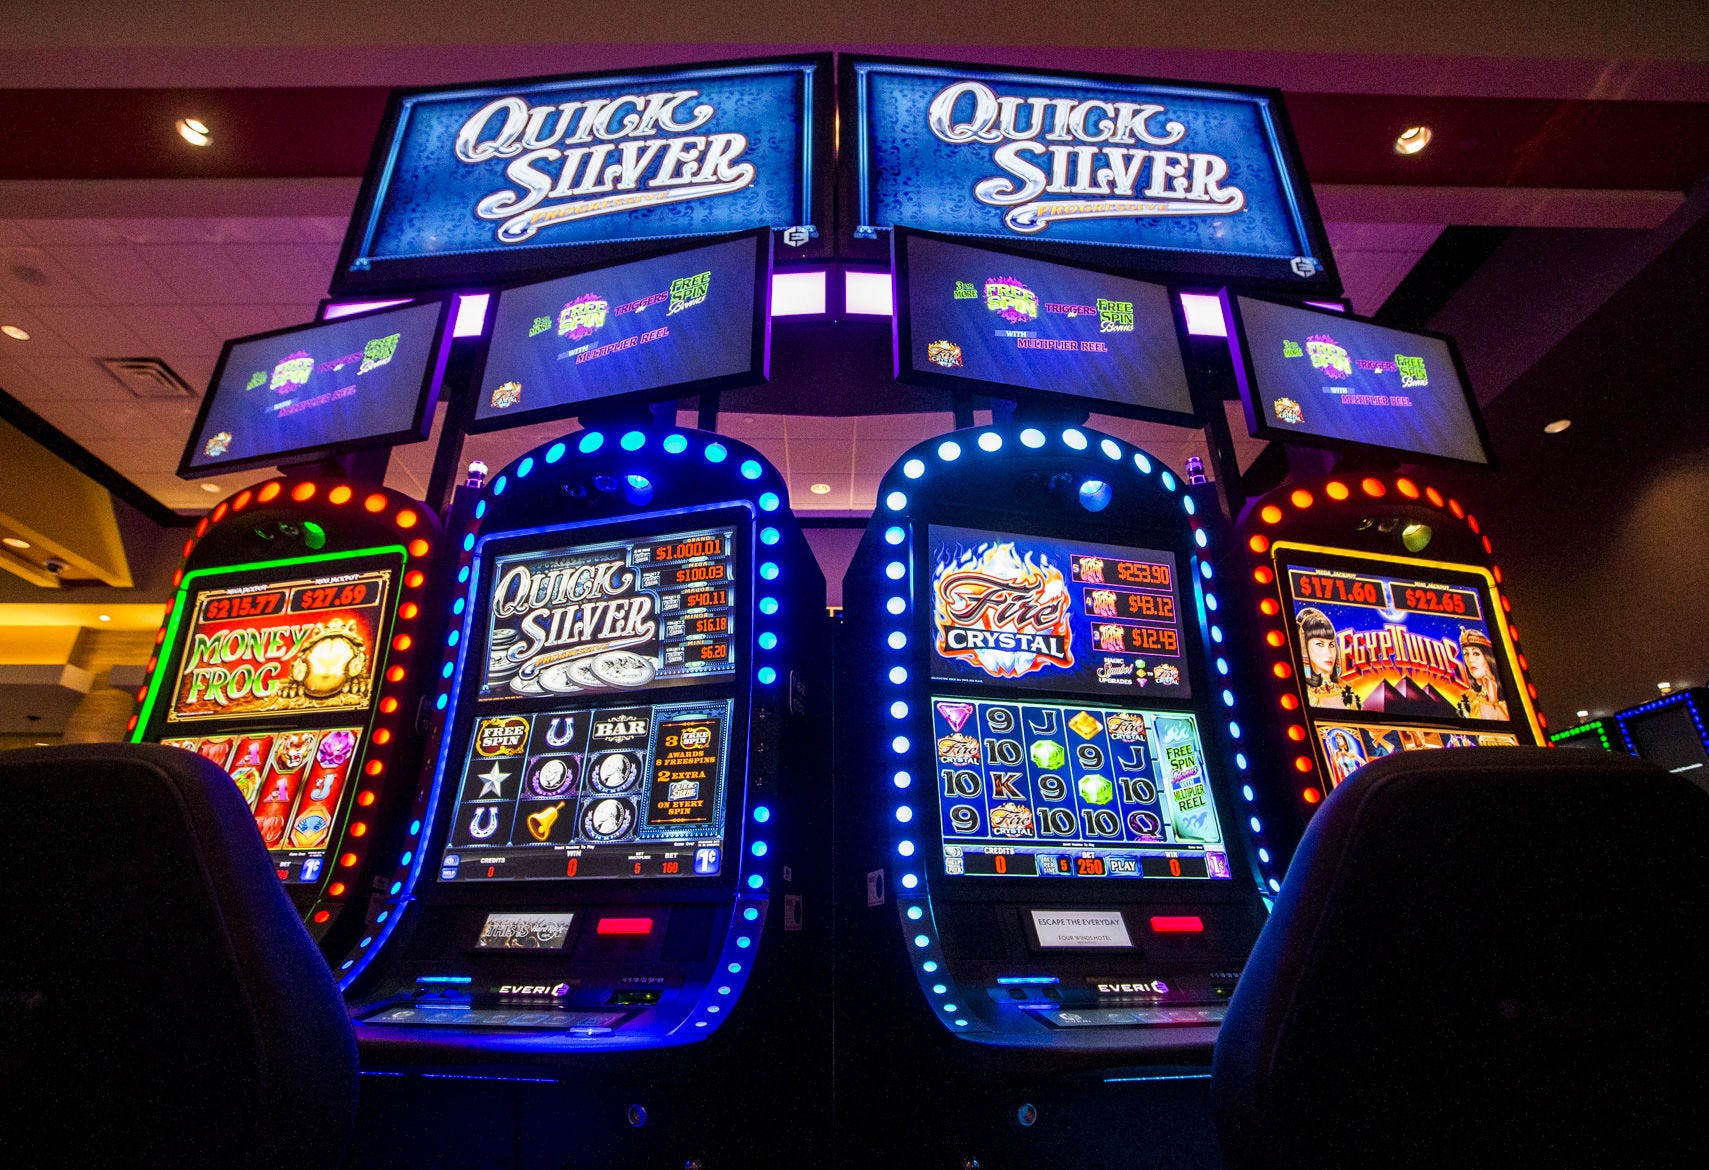 four winds online casino promo code